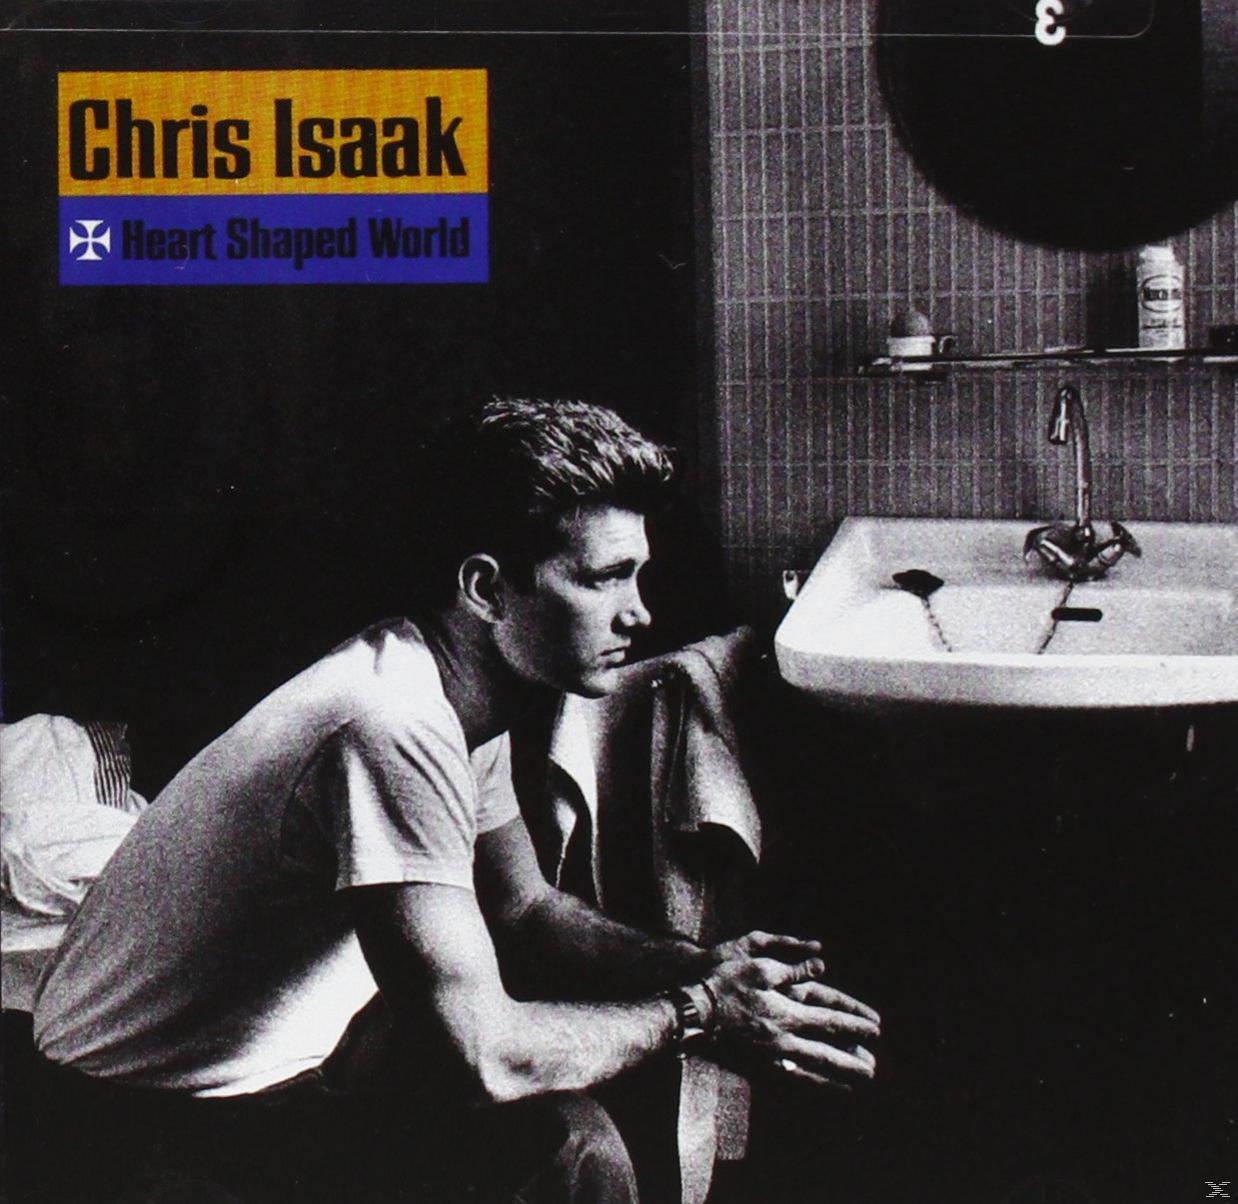 Chris Isaak - Shaped - Heart (CD) World